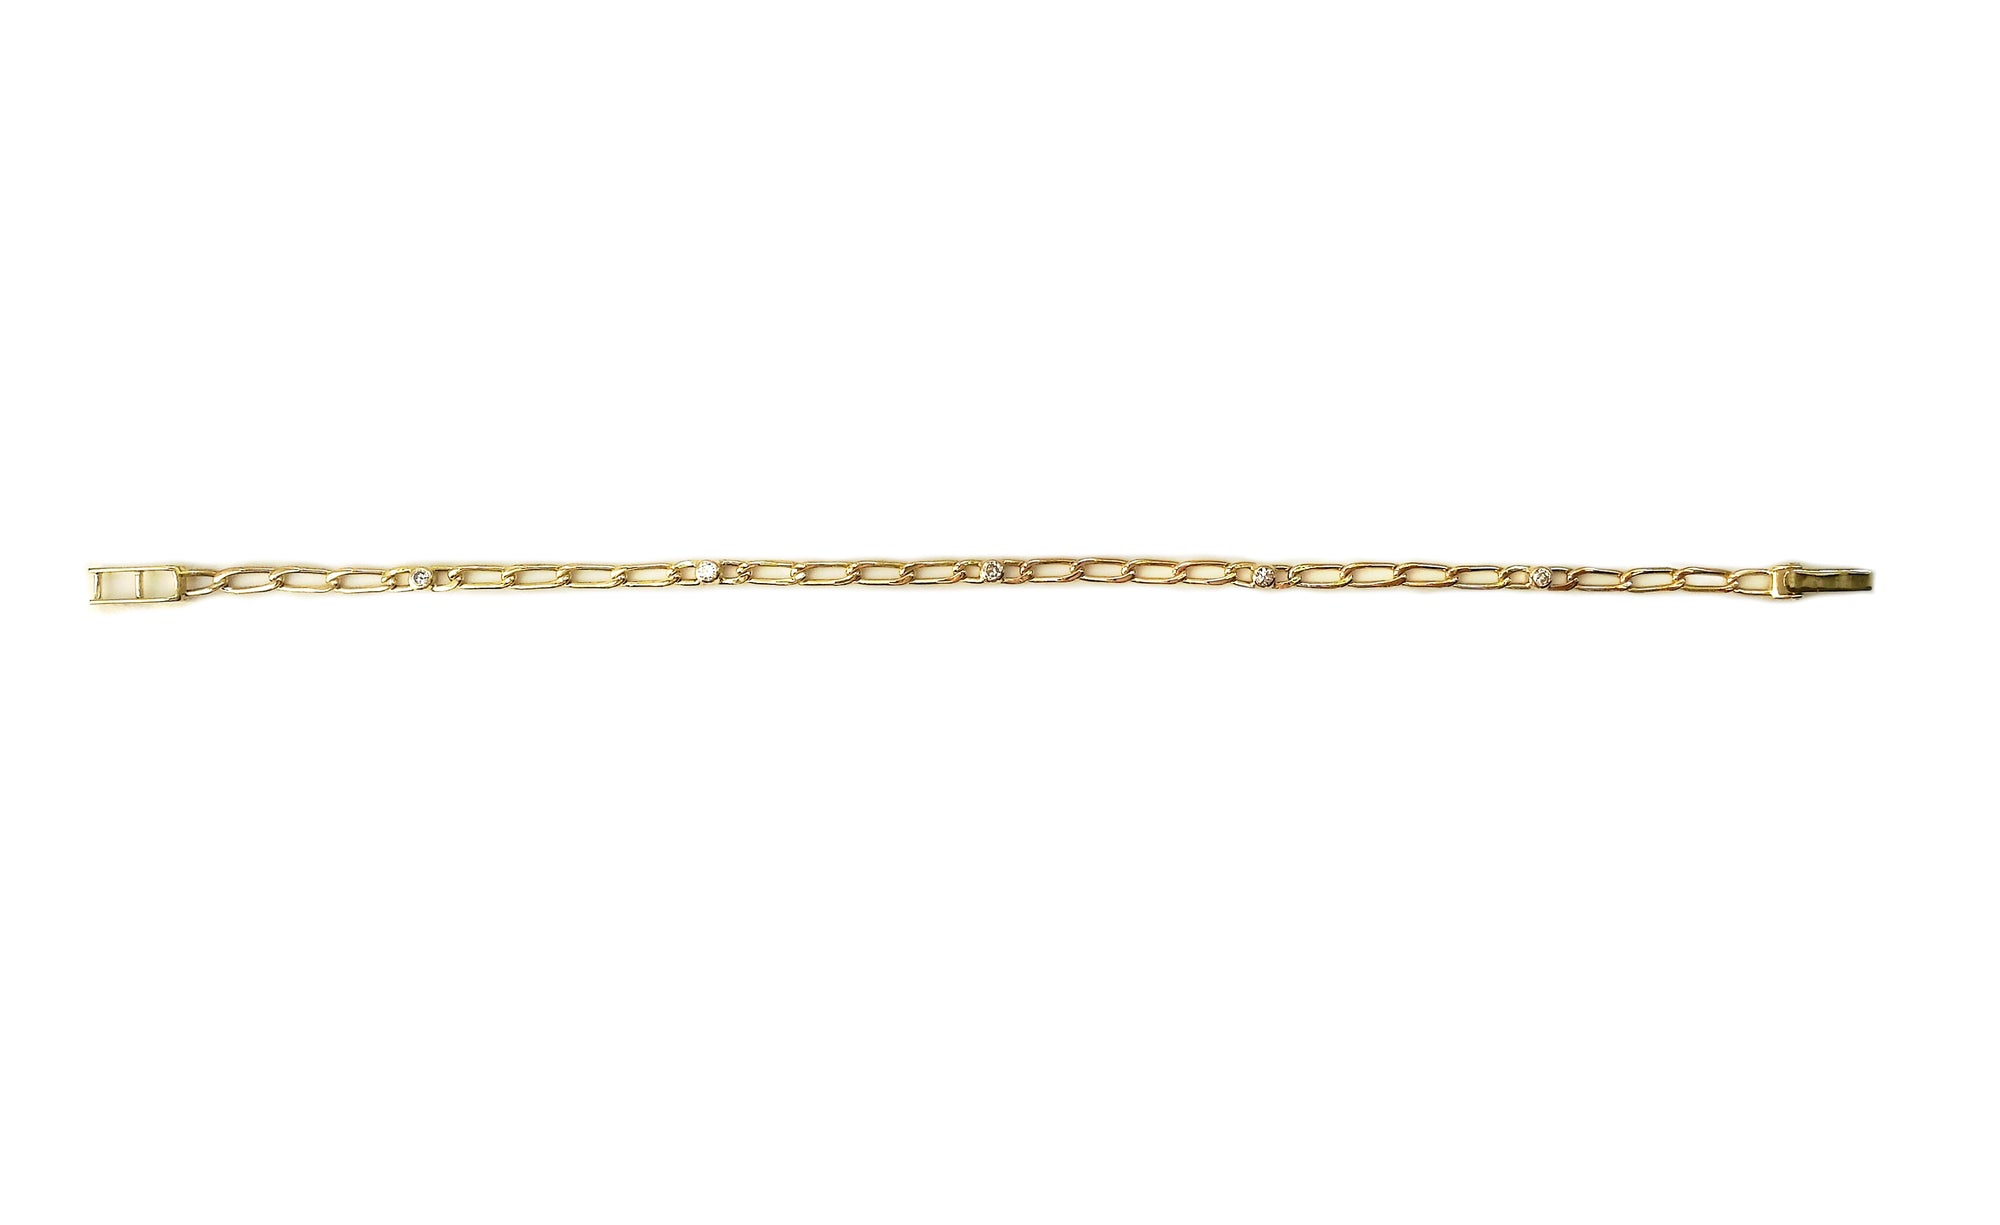 Vintage 1990s Cartier Diamond Link Bracelet in 18k Yellow Gold, 7.5 inch